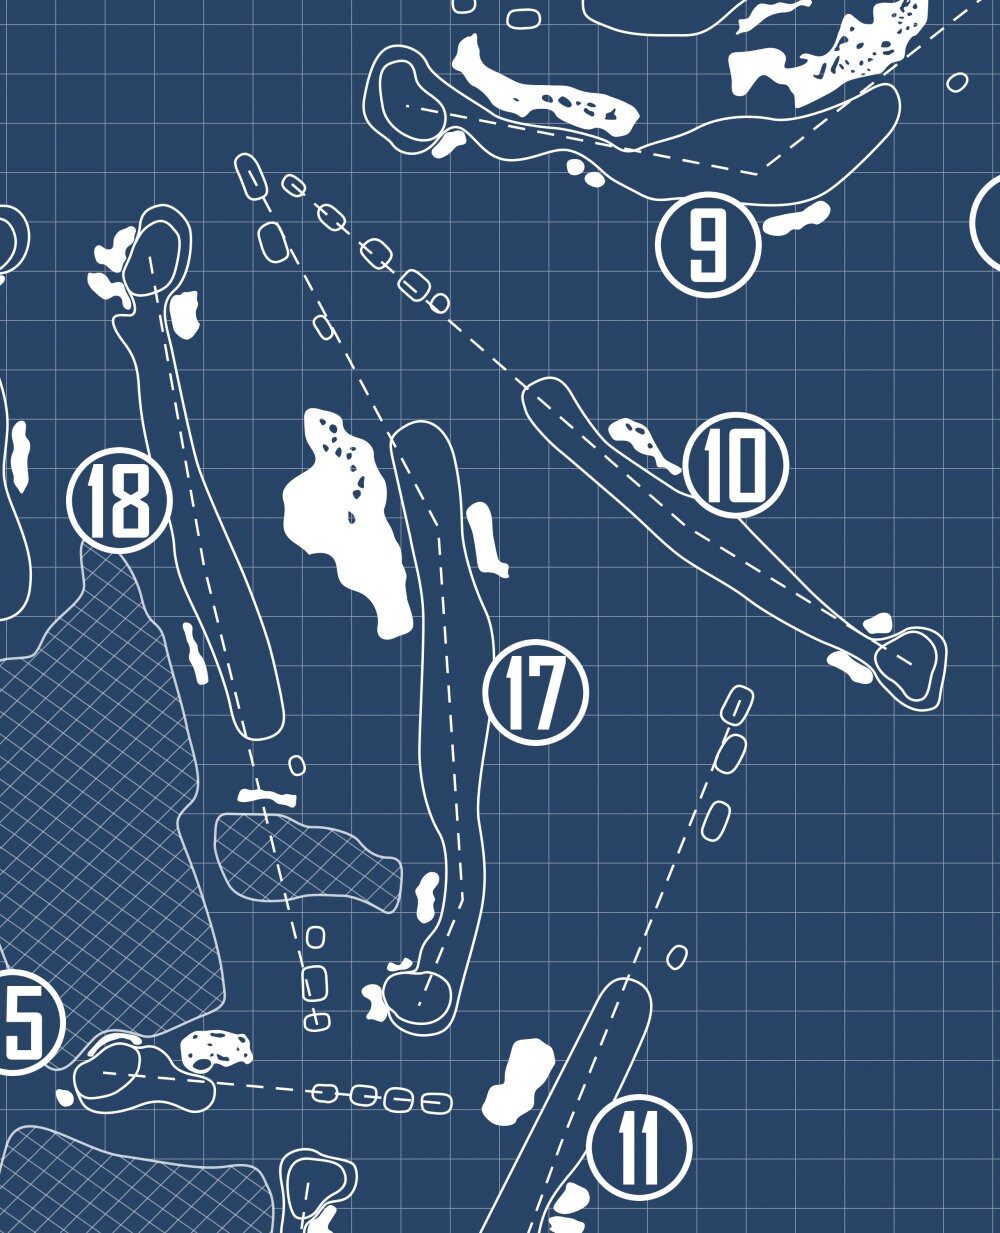 Pinehurst No. 8 Golf Course Blueprint (Print)